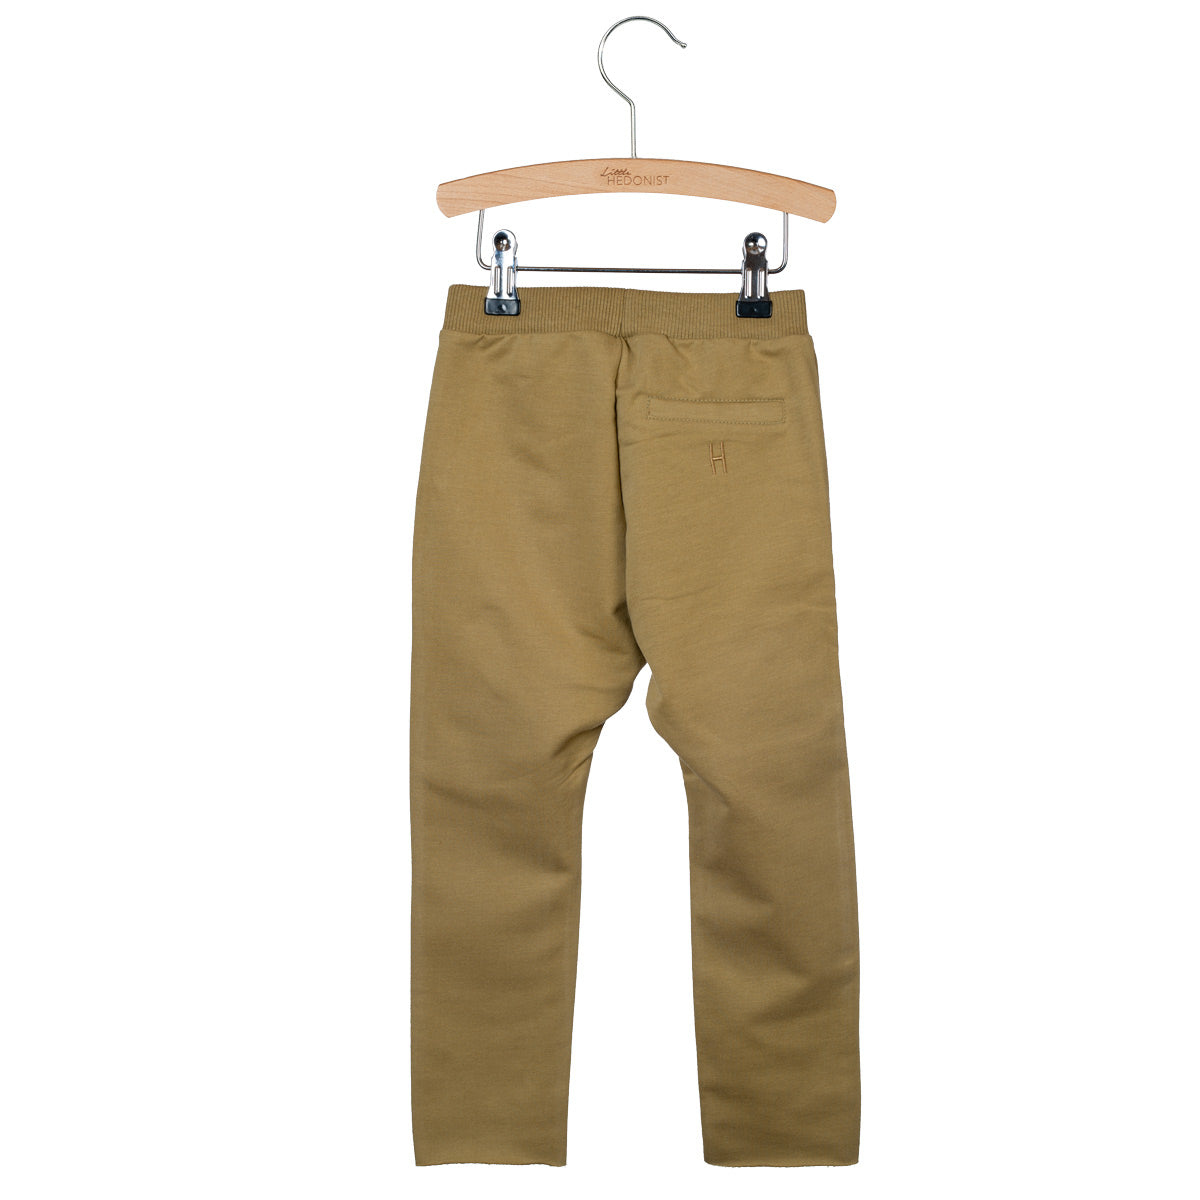 LITTLE HEDONIST - Pantalon vert confortable ample neuf - 12 mois